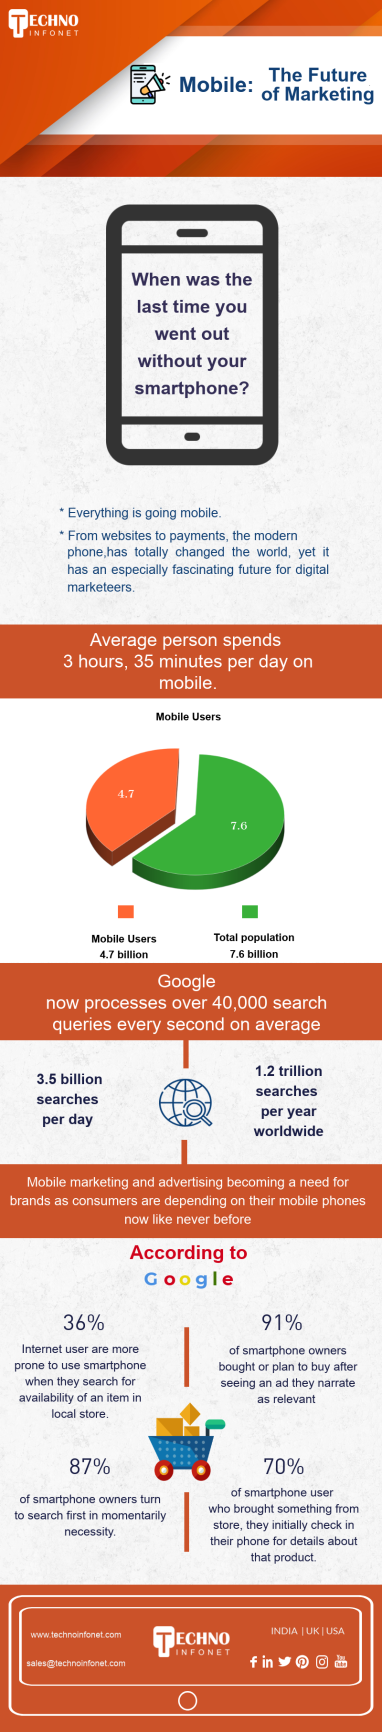 Mobile: The Future of Marketing